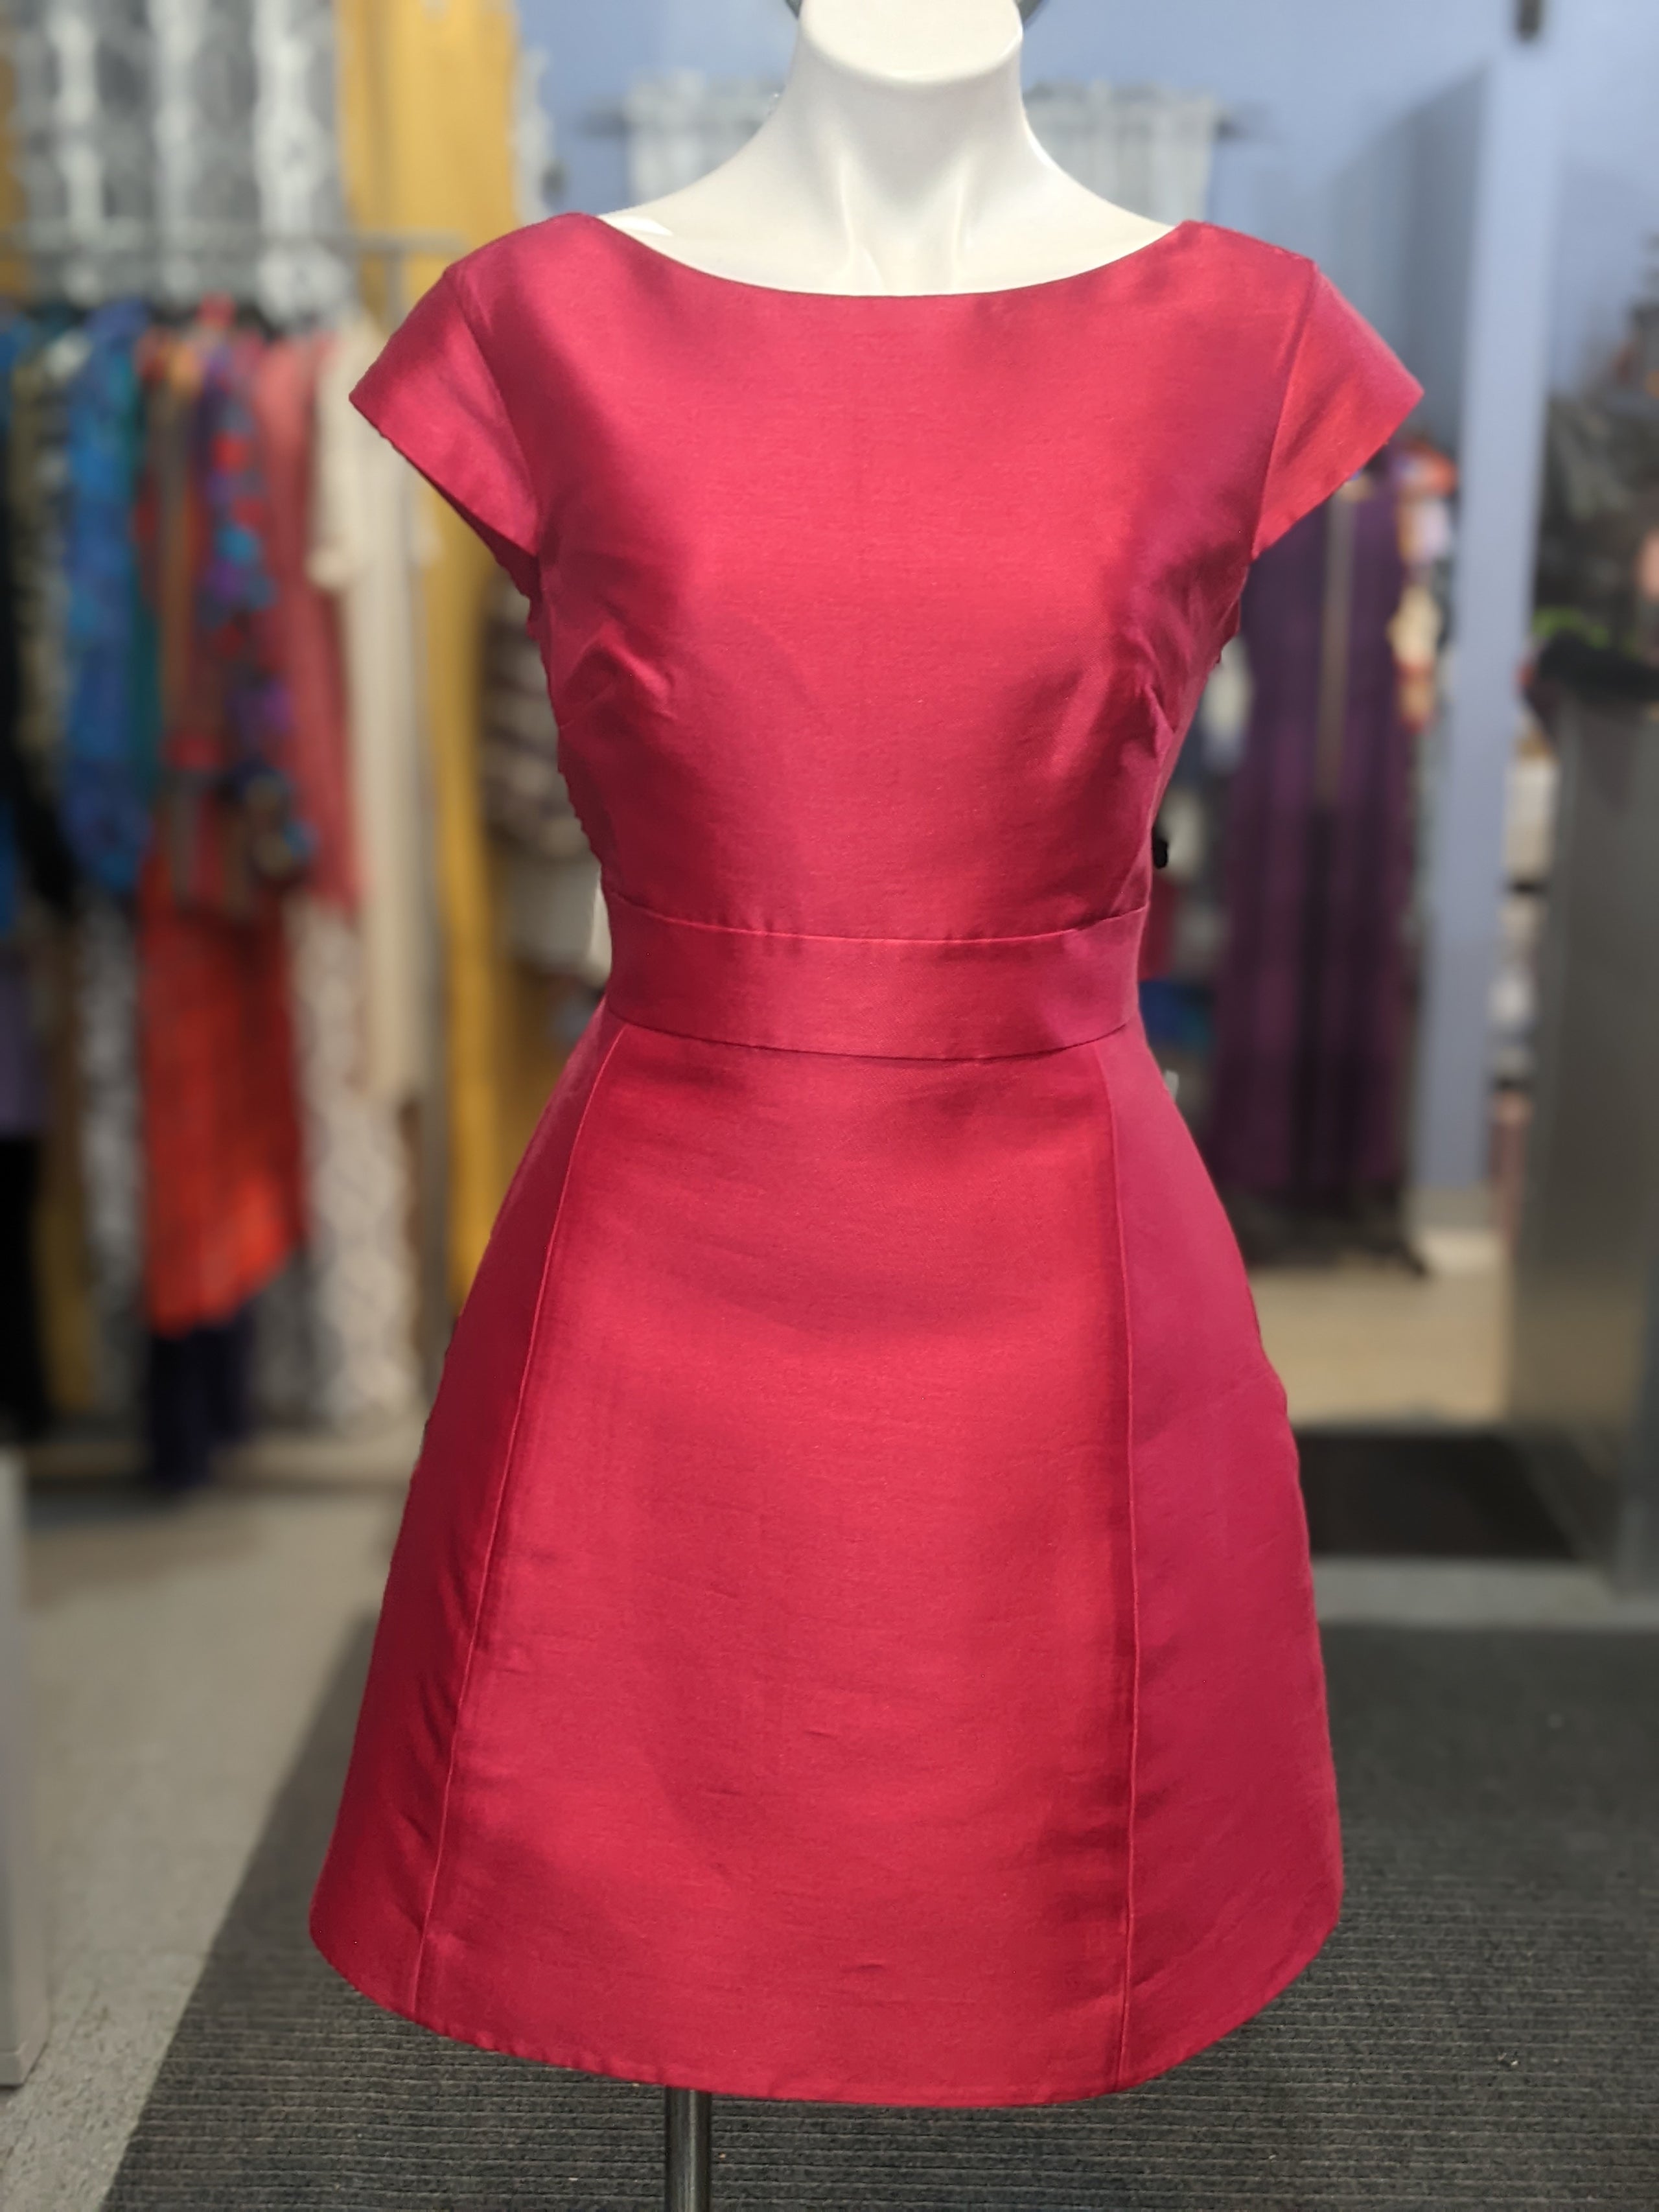 Kate Spade Backless Pink Dress Sz. 12 (Fits 4/6)